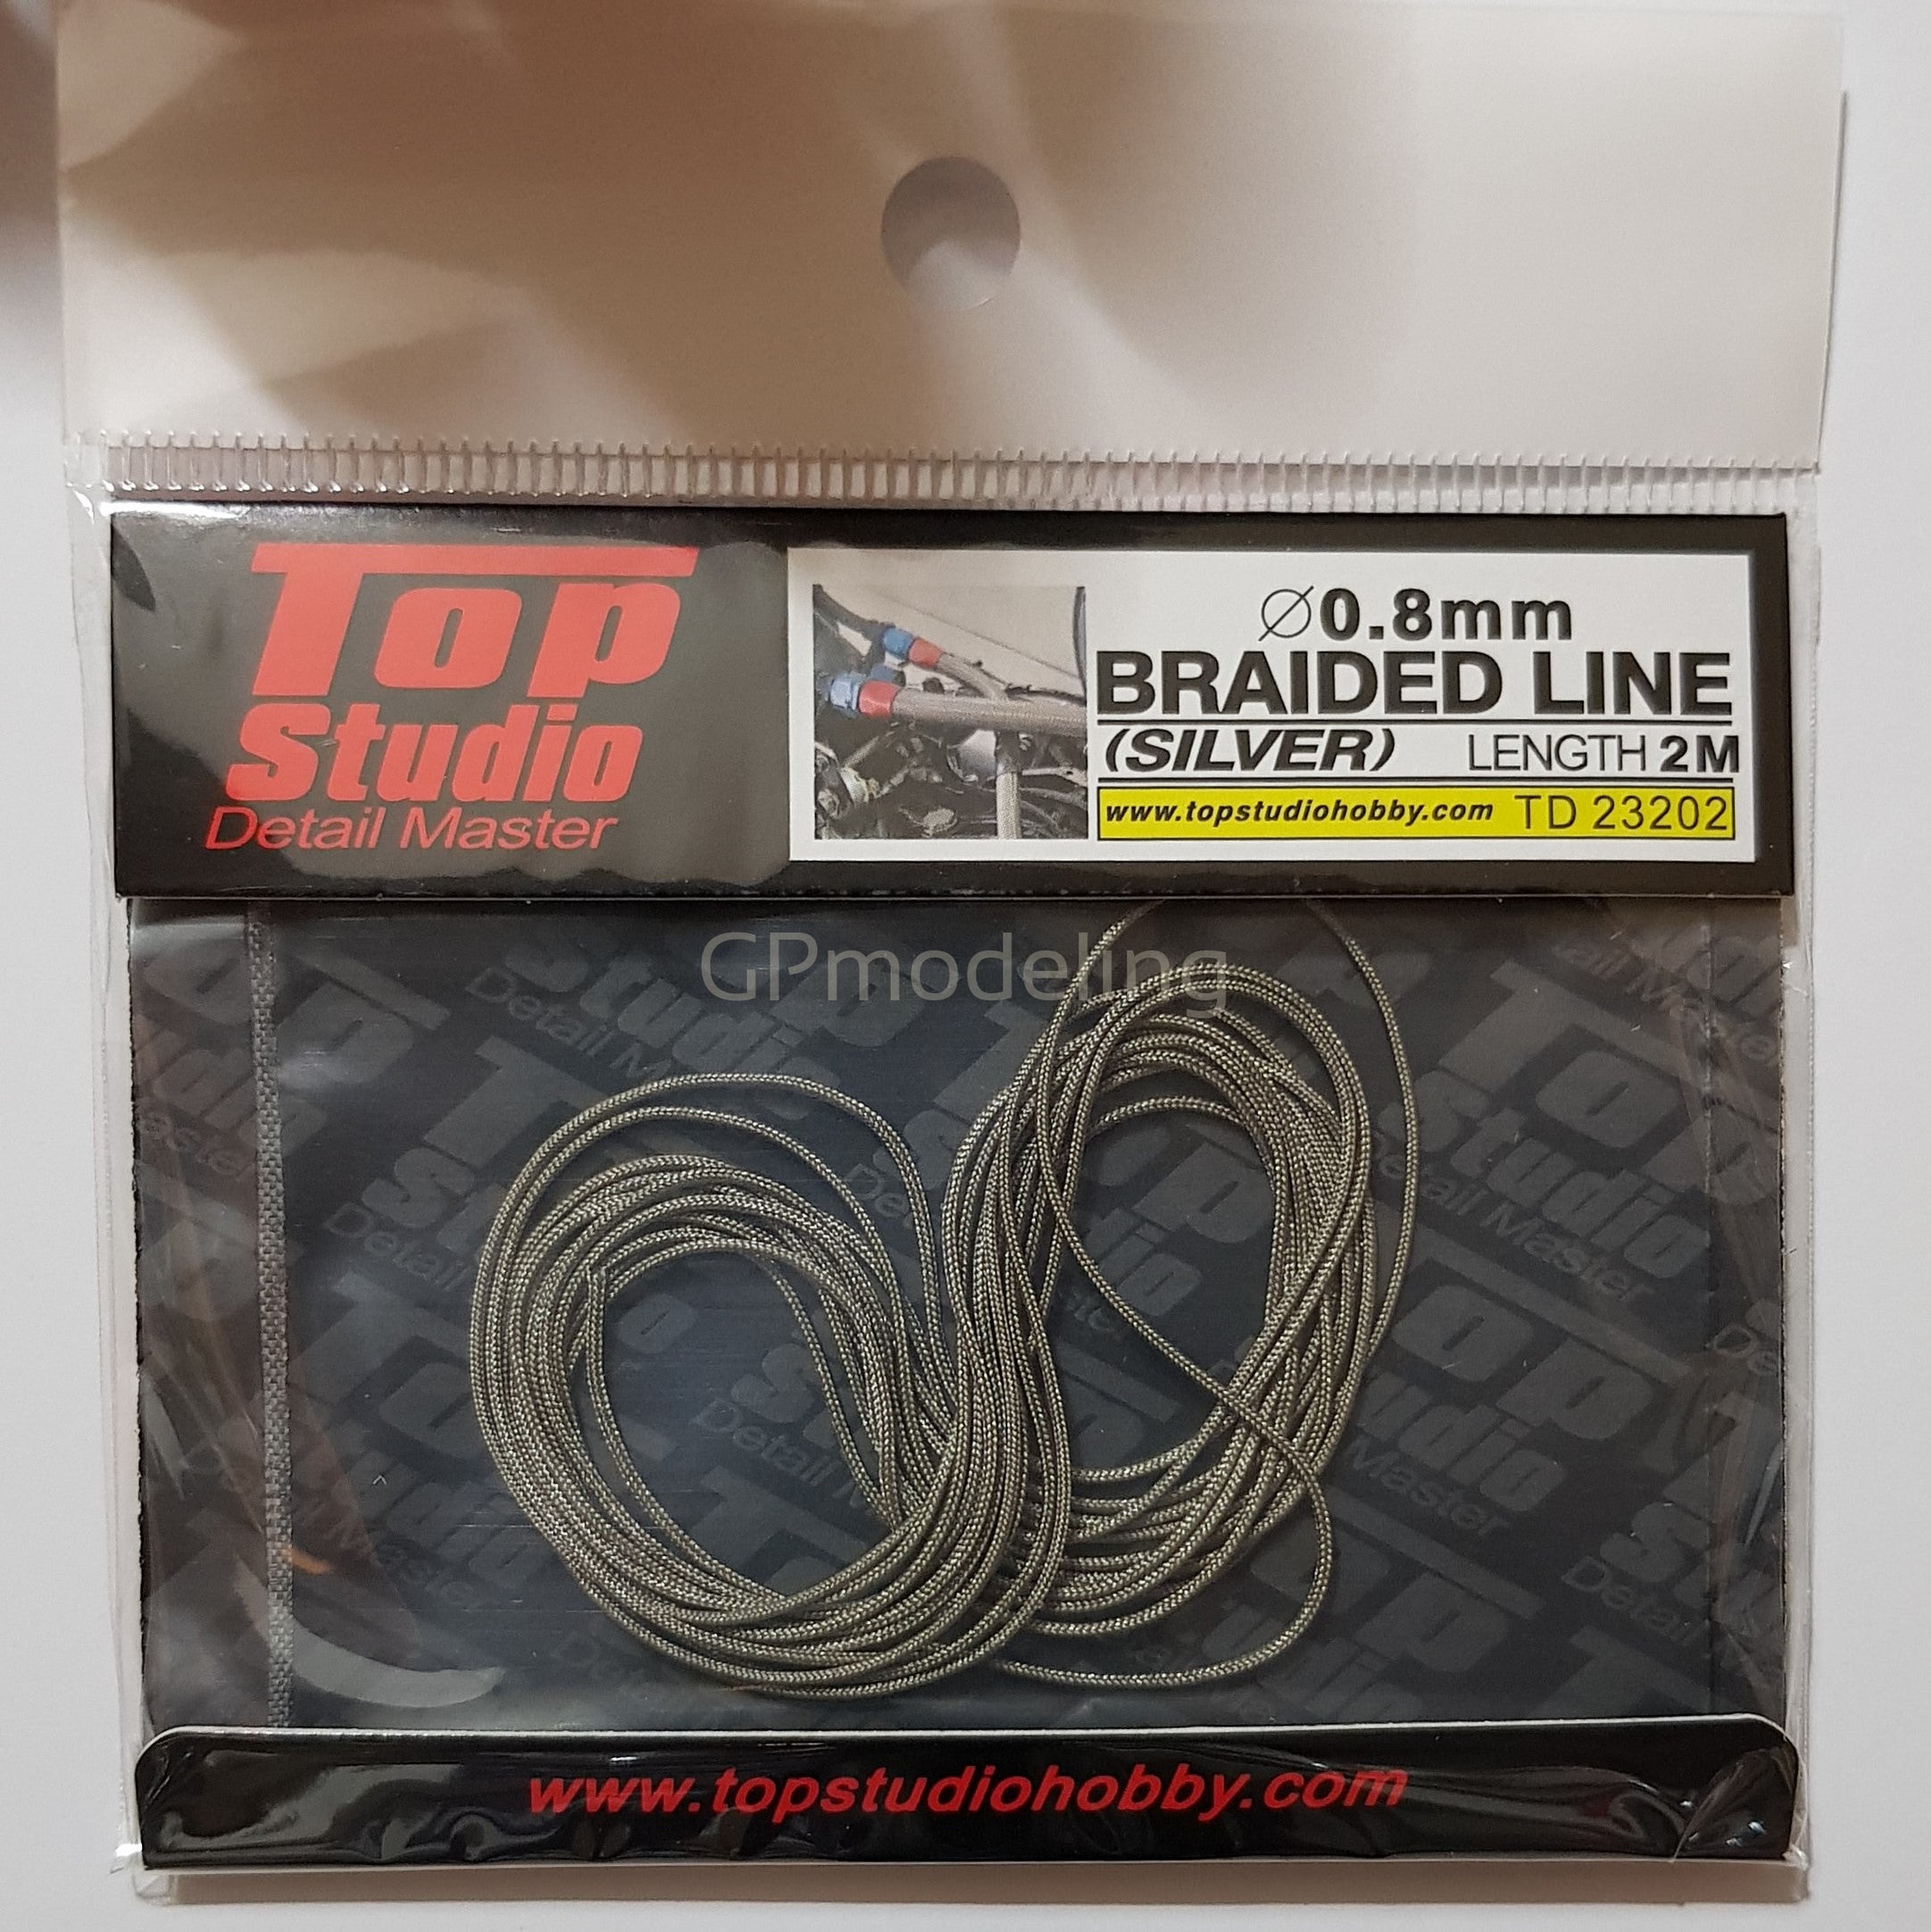 Top Studio Braided Line 0.8mm 2mt (silver) - TD23202